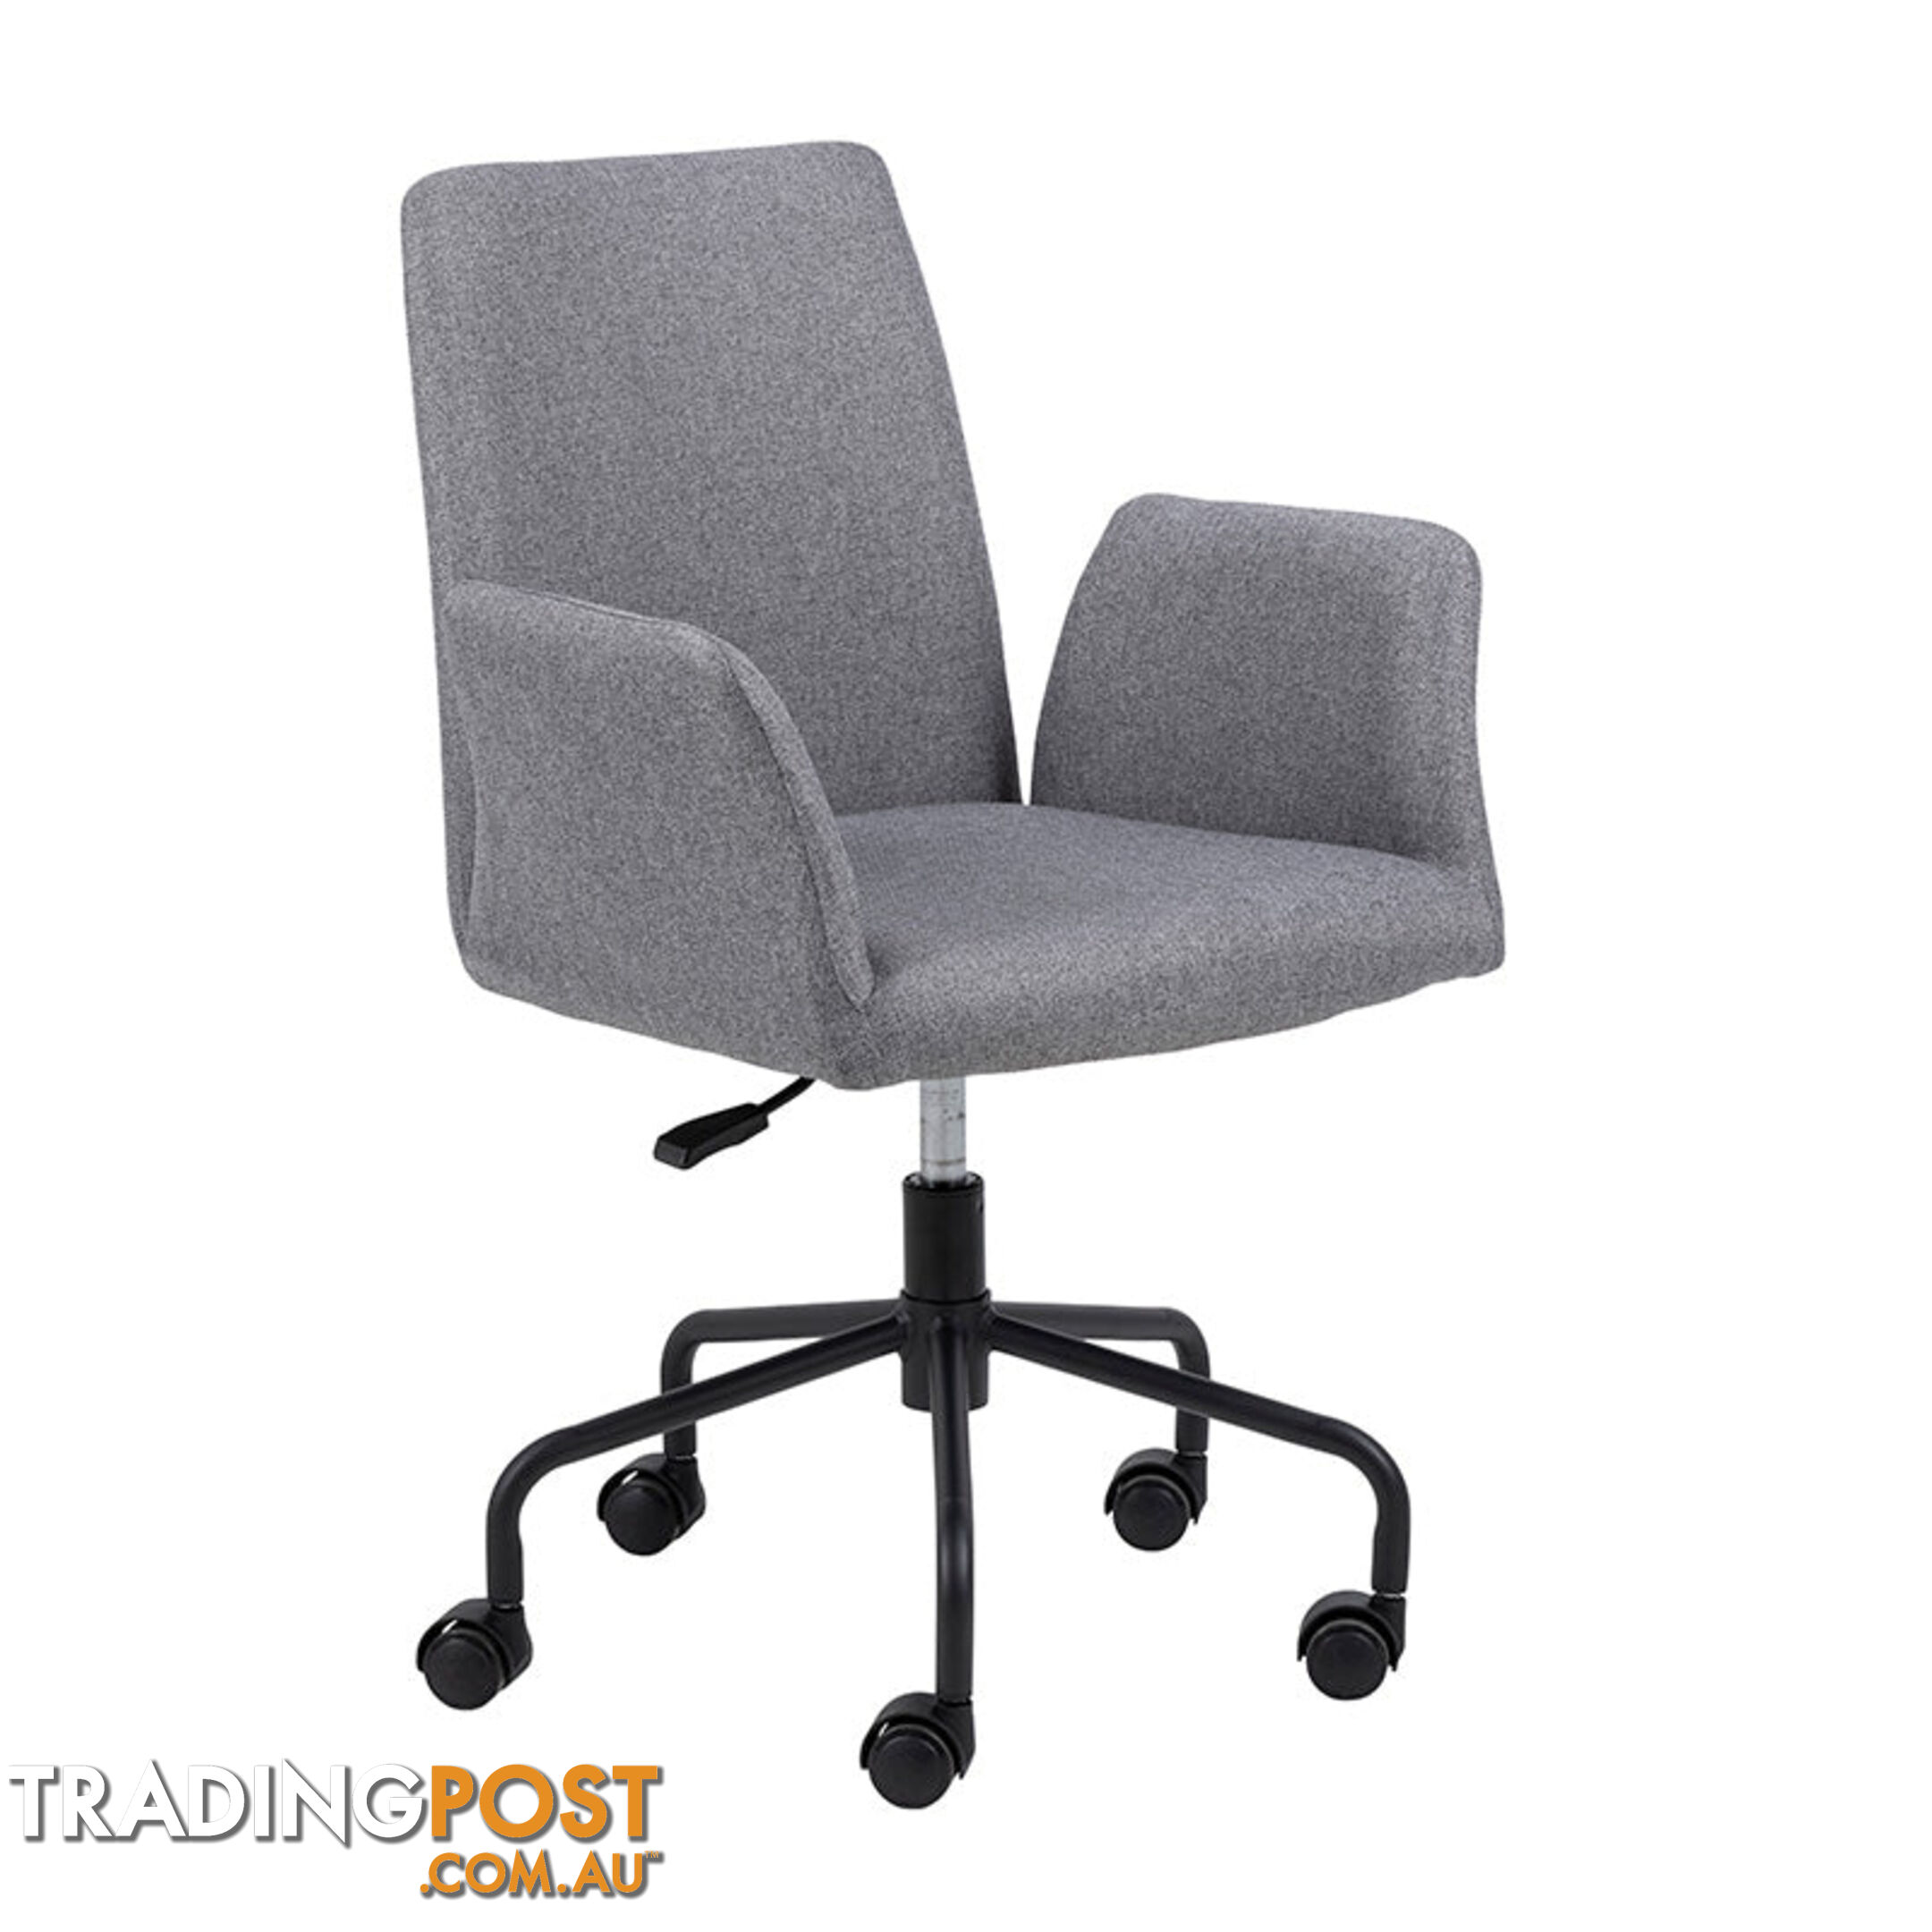 ISLA Office Chair - Light Grey & Black - AC-0000092514 - 5713941187178